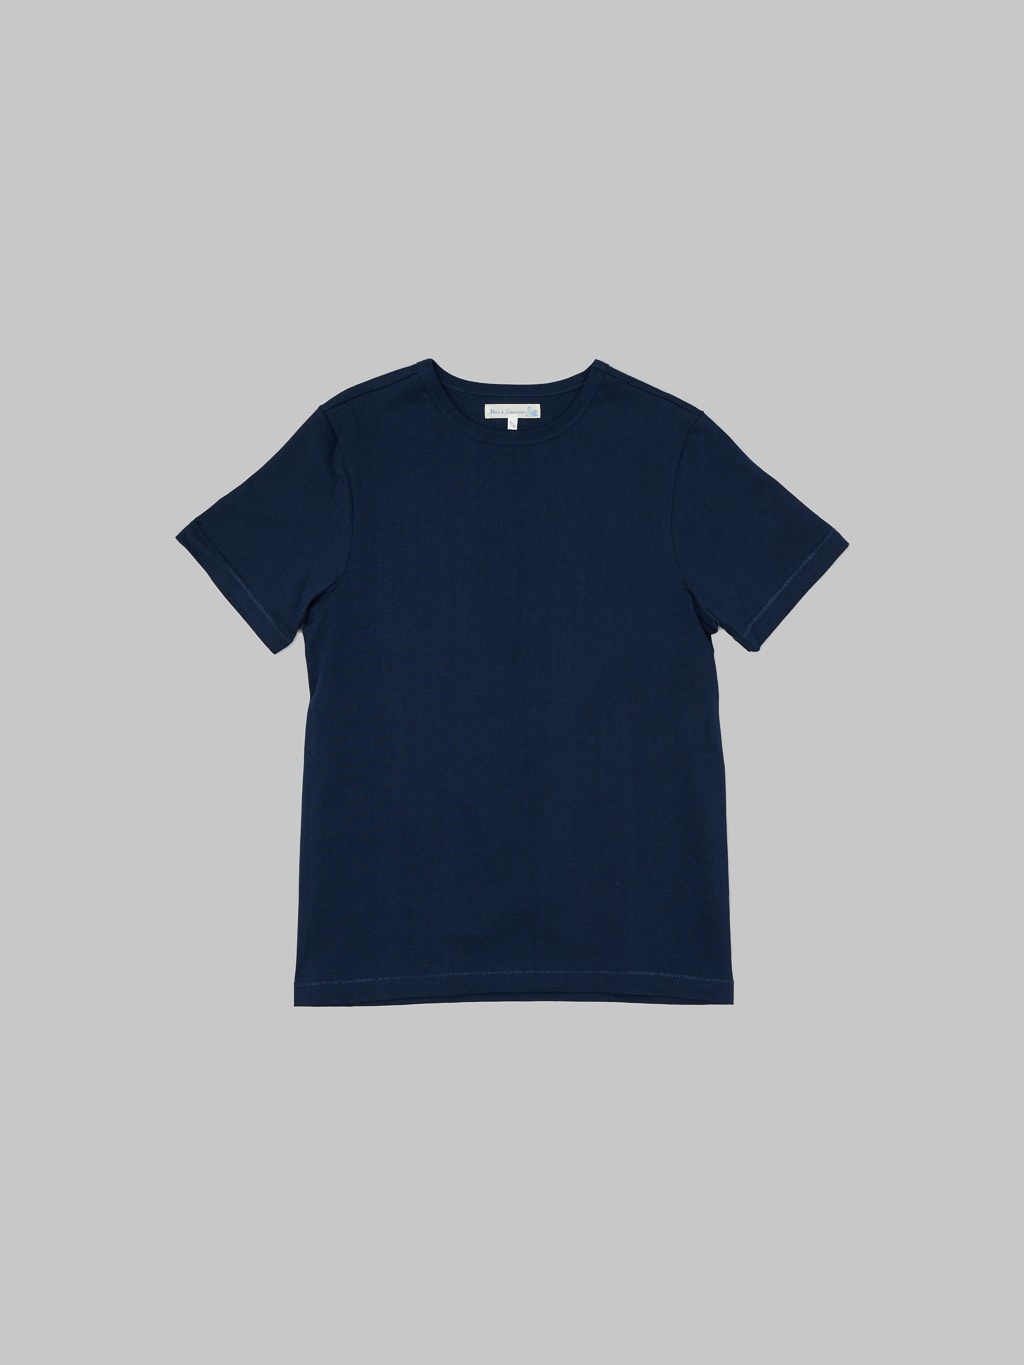 merz b schwanen 215 loopwheeled Tshirt classic fit blue organic cotton